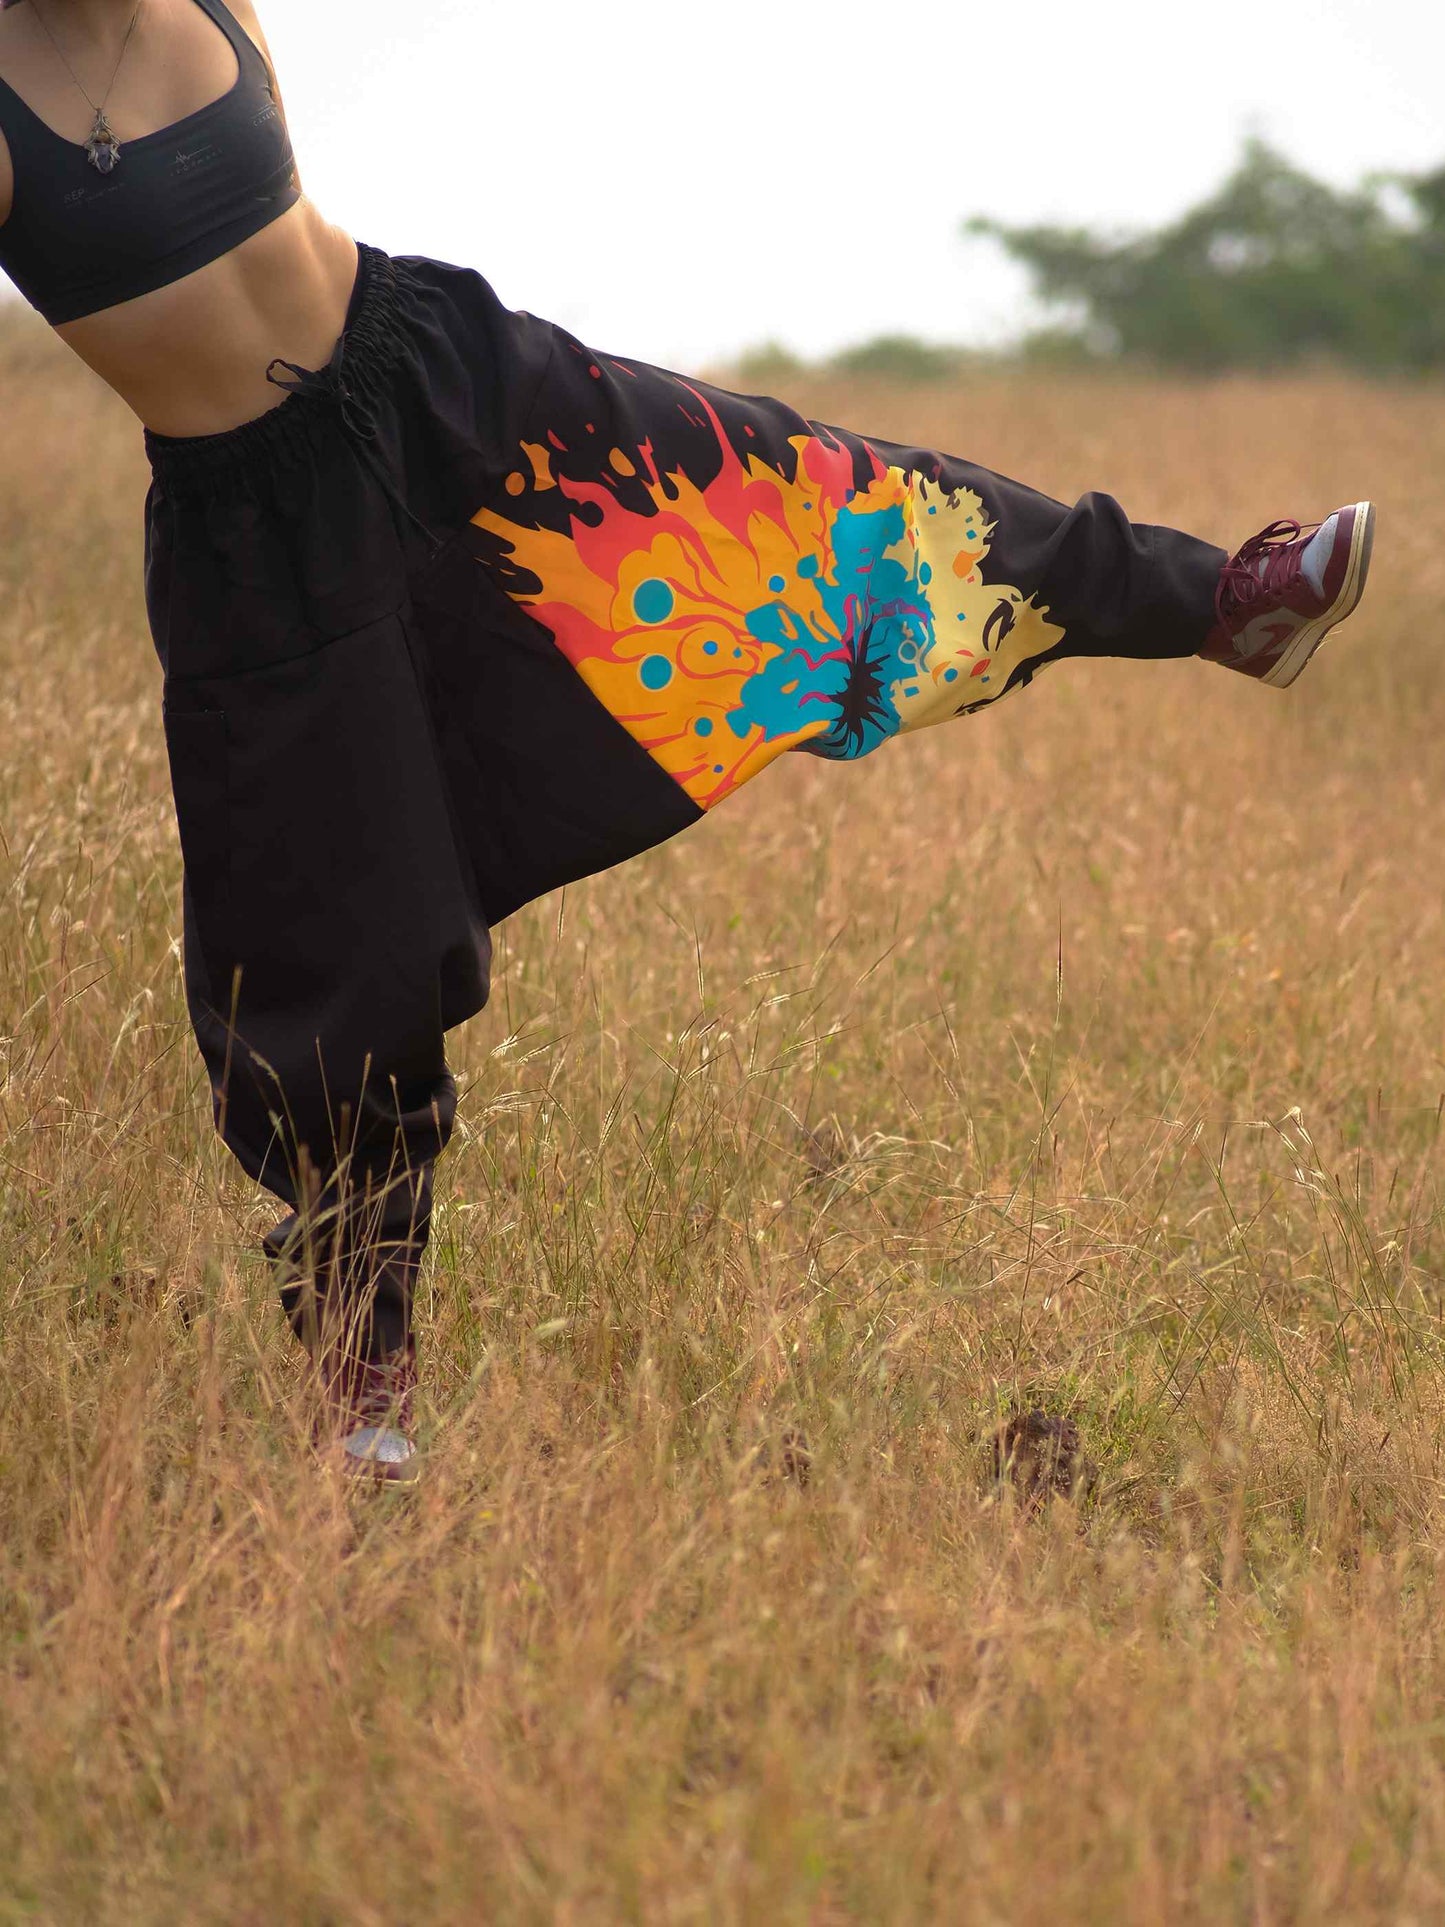 Buy Men's Lion Print Groove Dance Harem Pants For Travel Dance Yoga